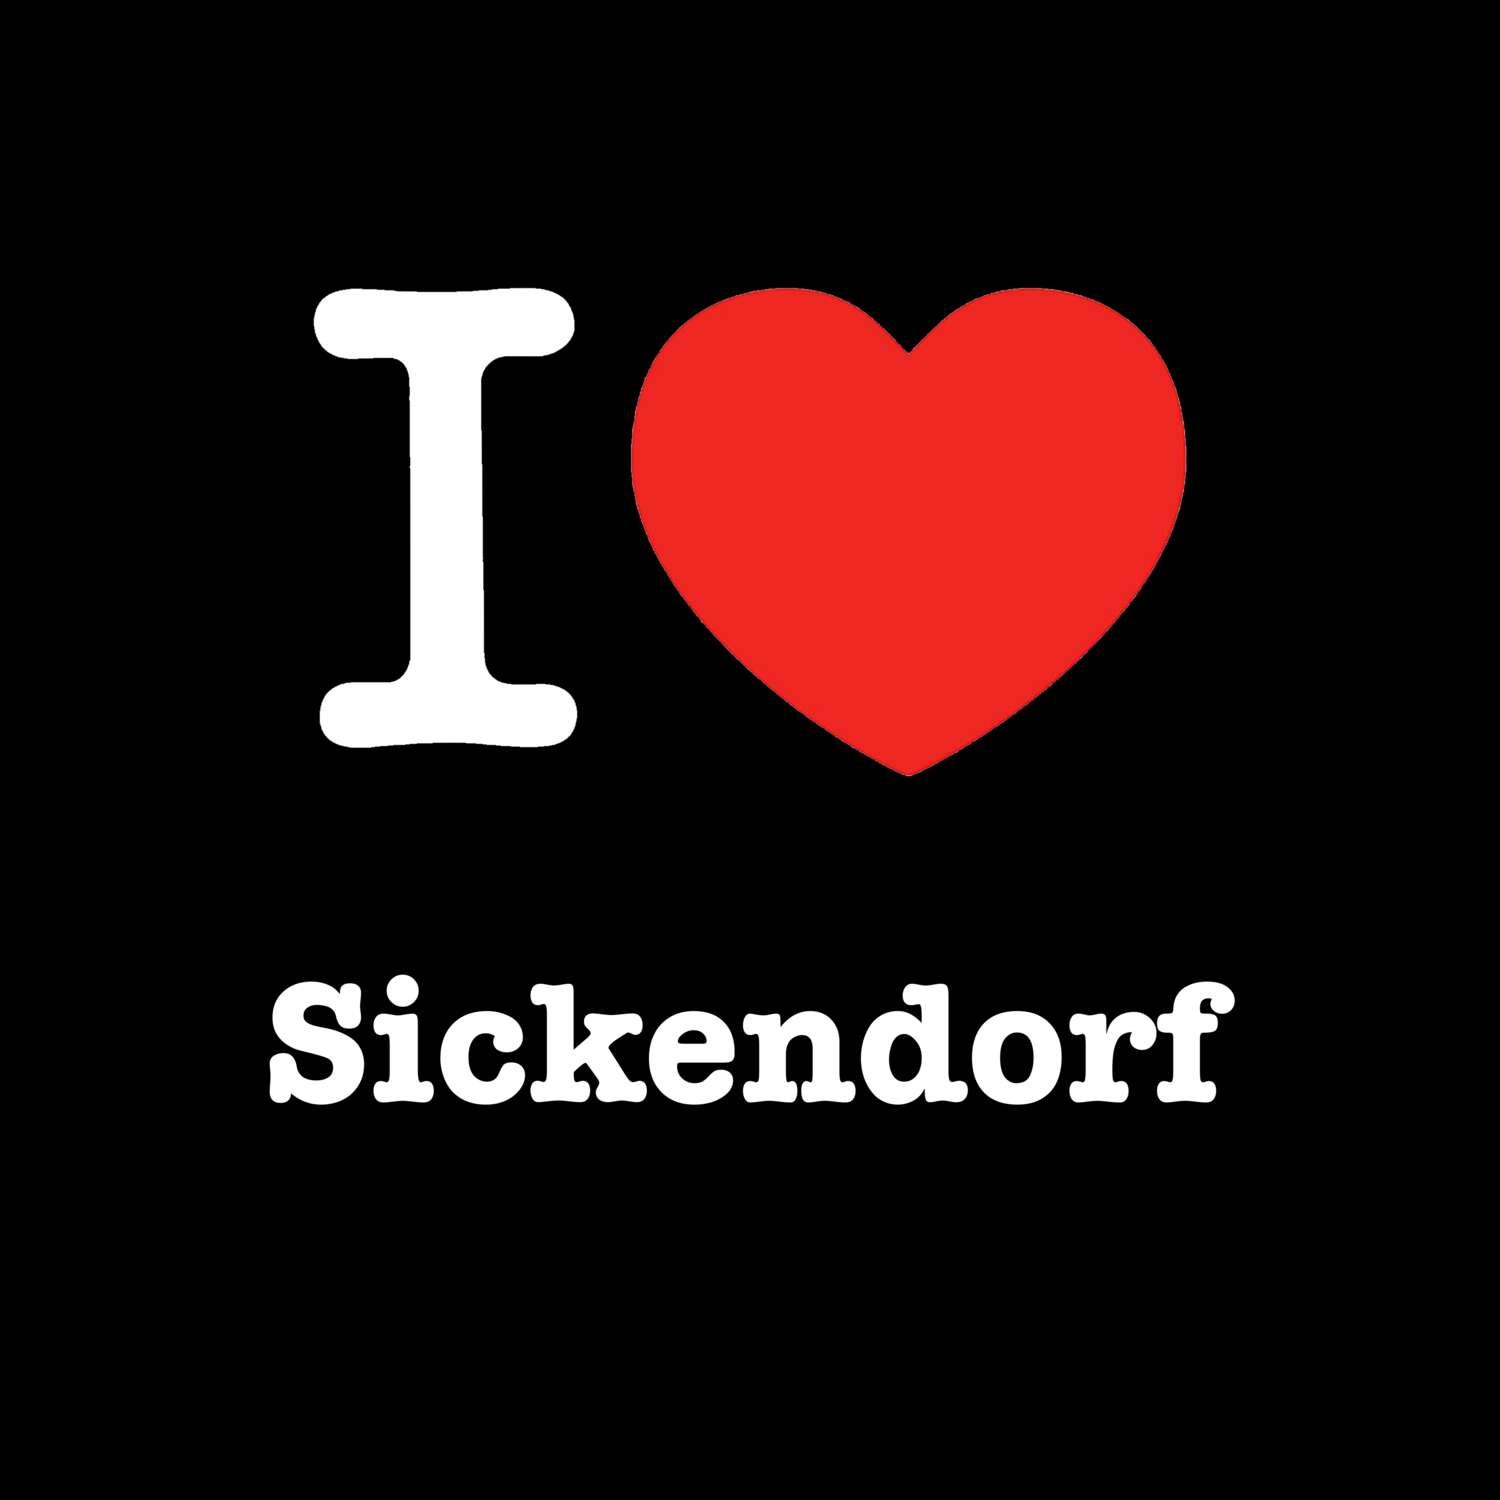 Sickendorf T-Shirt »I love«